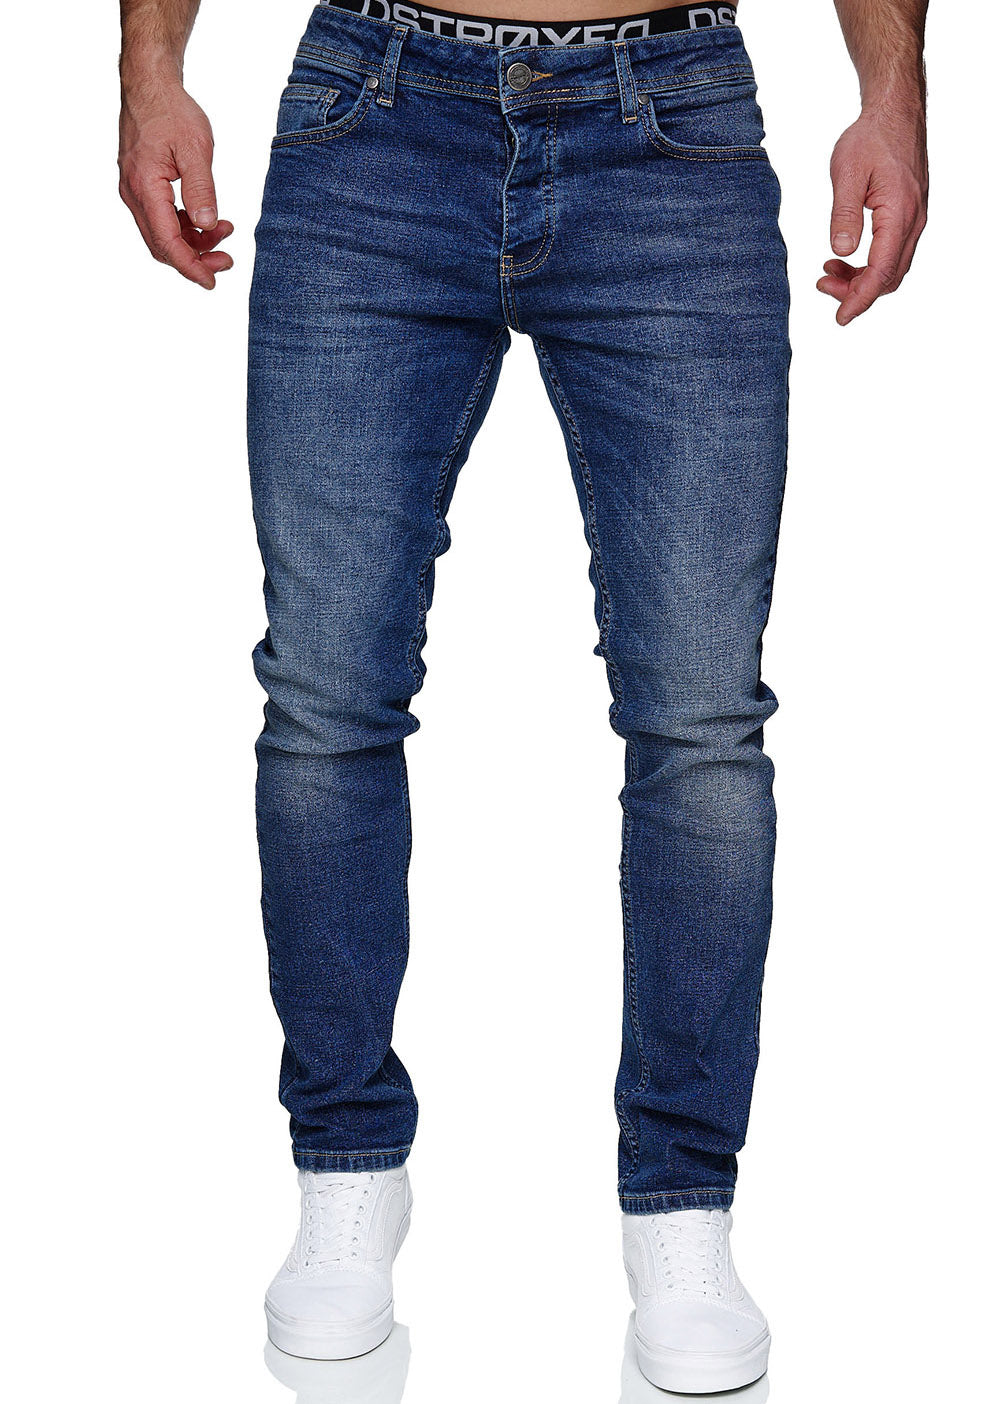 (1512)/1509 jeans Dunkelblau-Farbe-blue_final